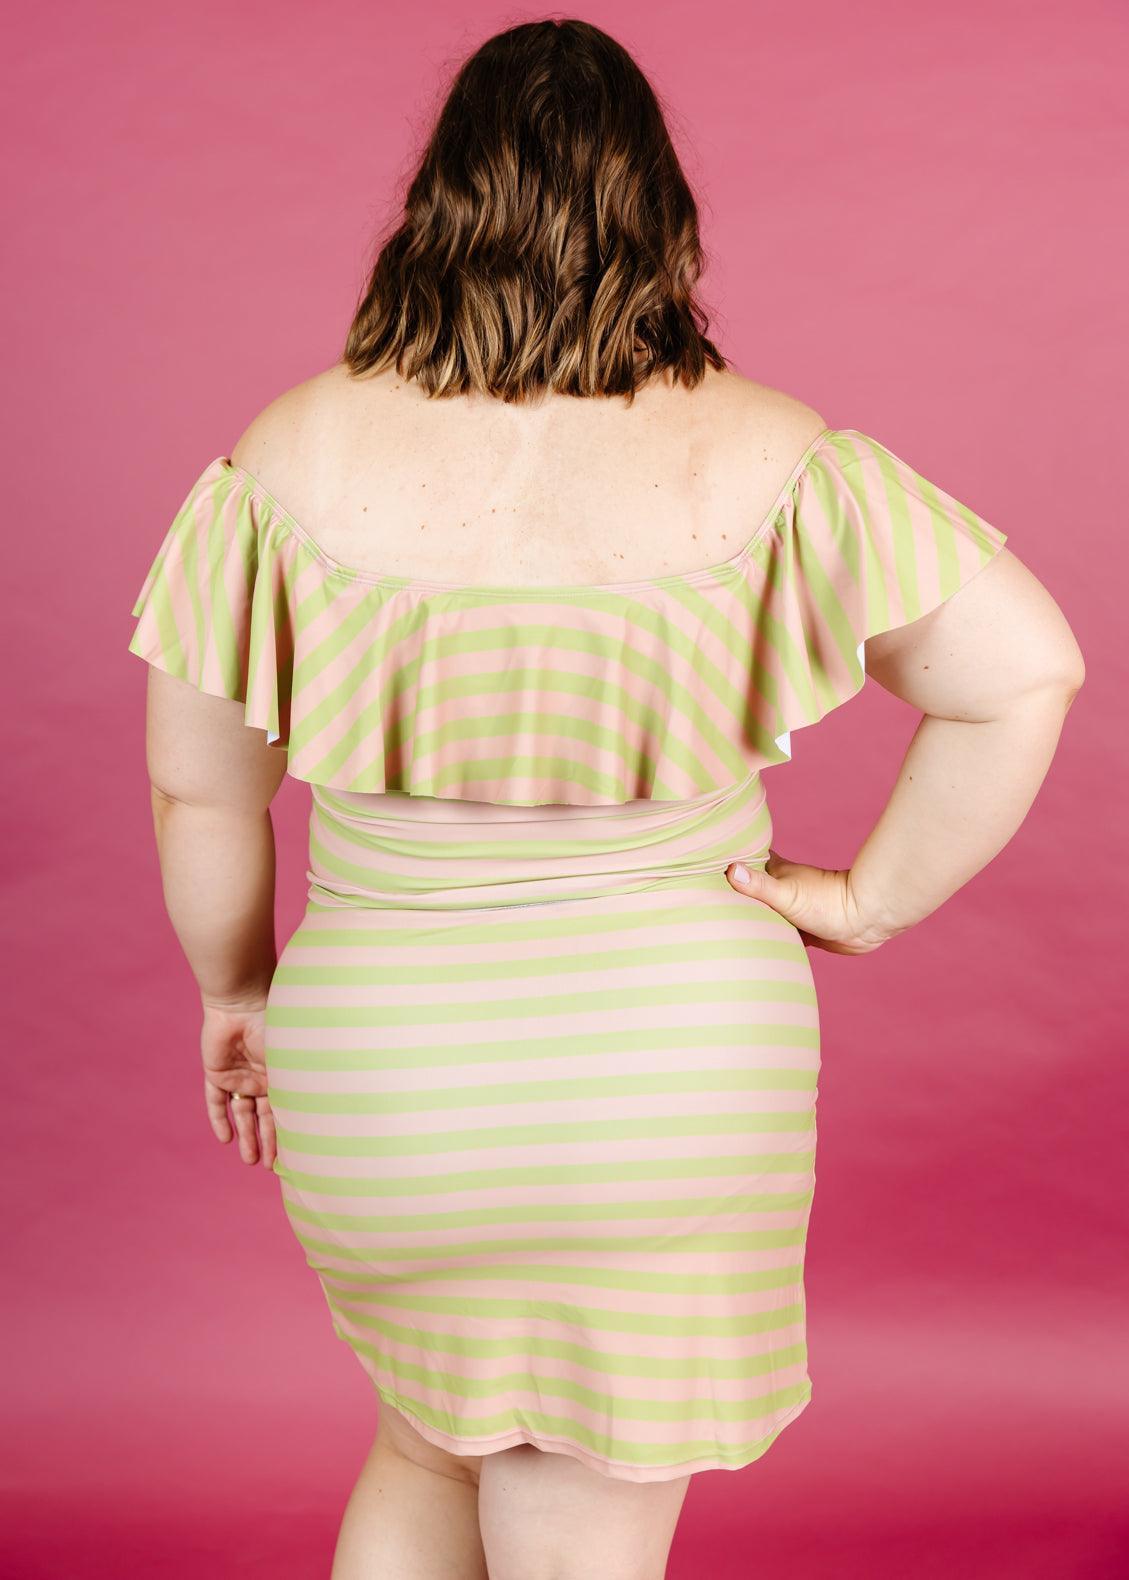 Crop Top Swimsuit - Pink/Green Stripe